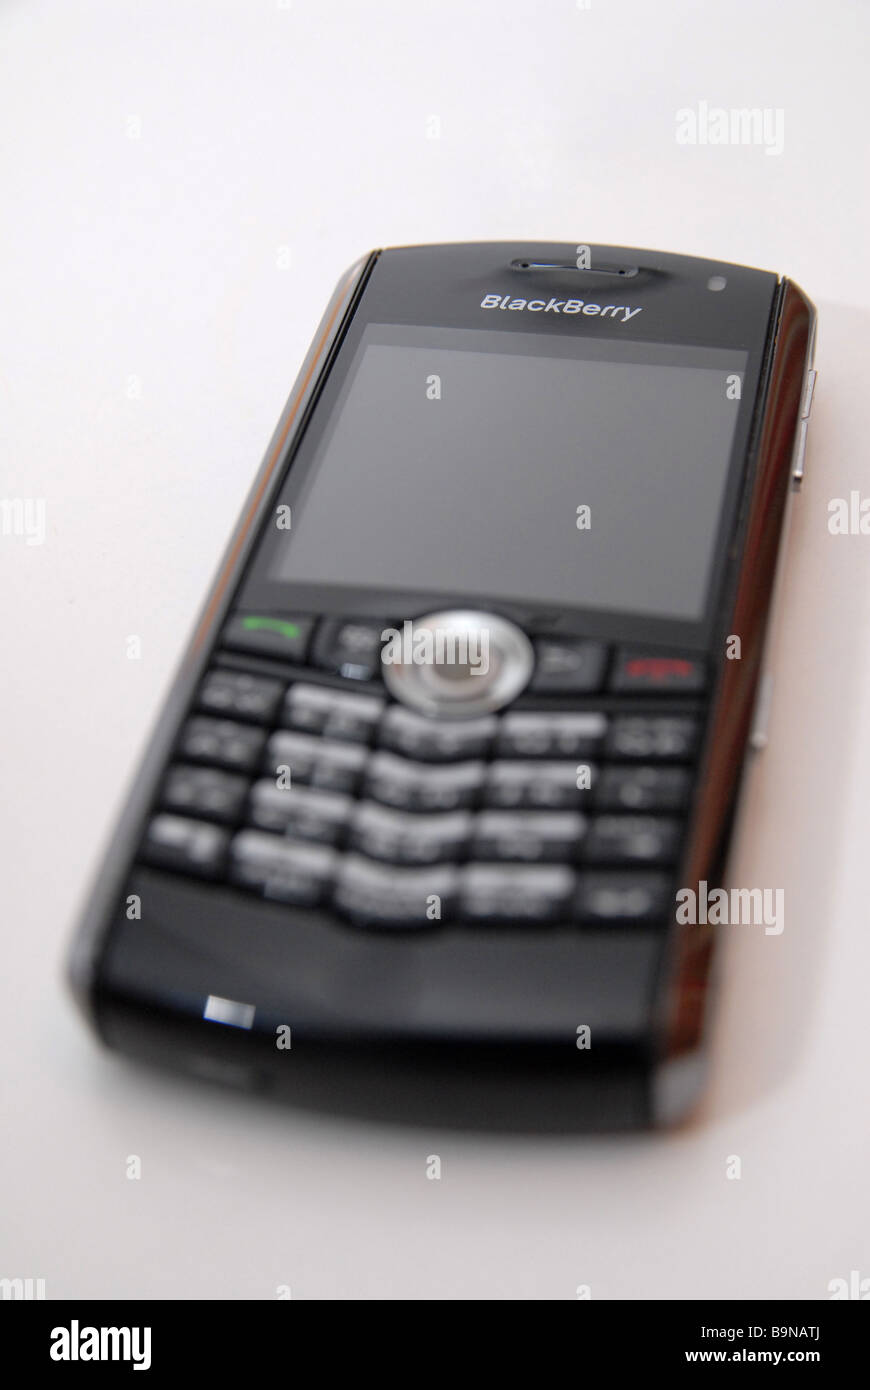 A Blackbery mobile phone/device Stock Photo